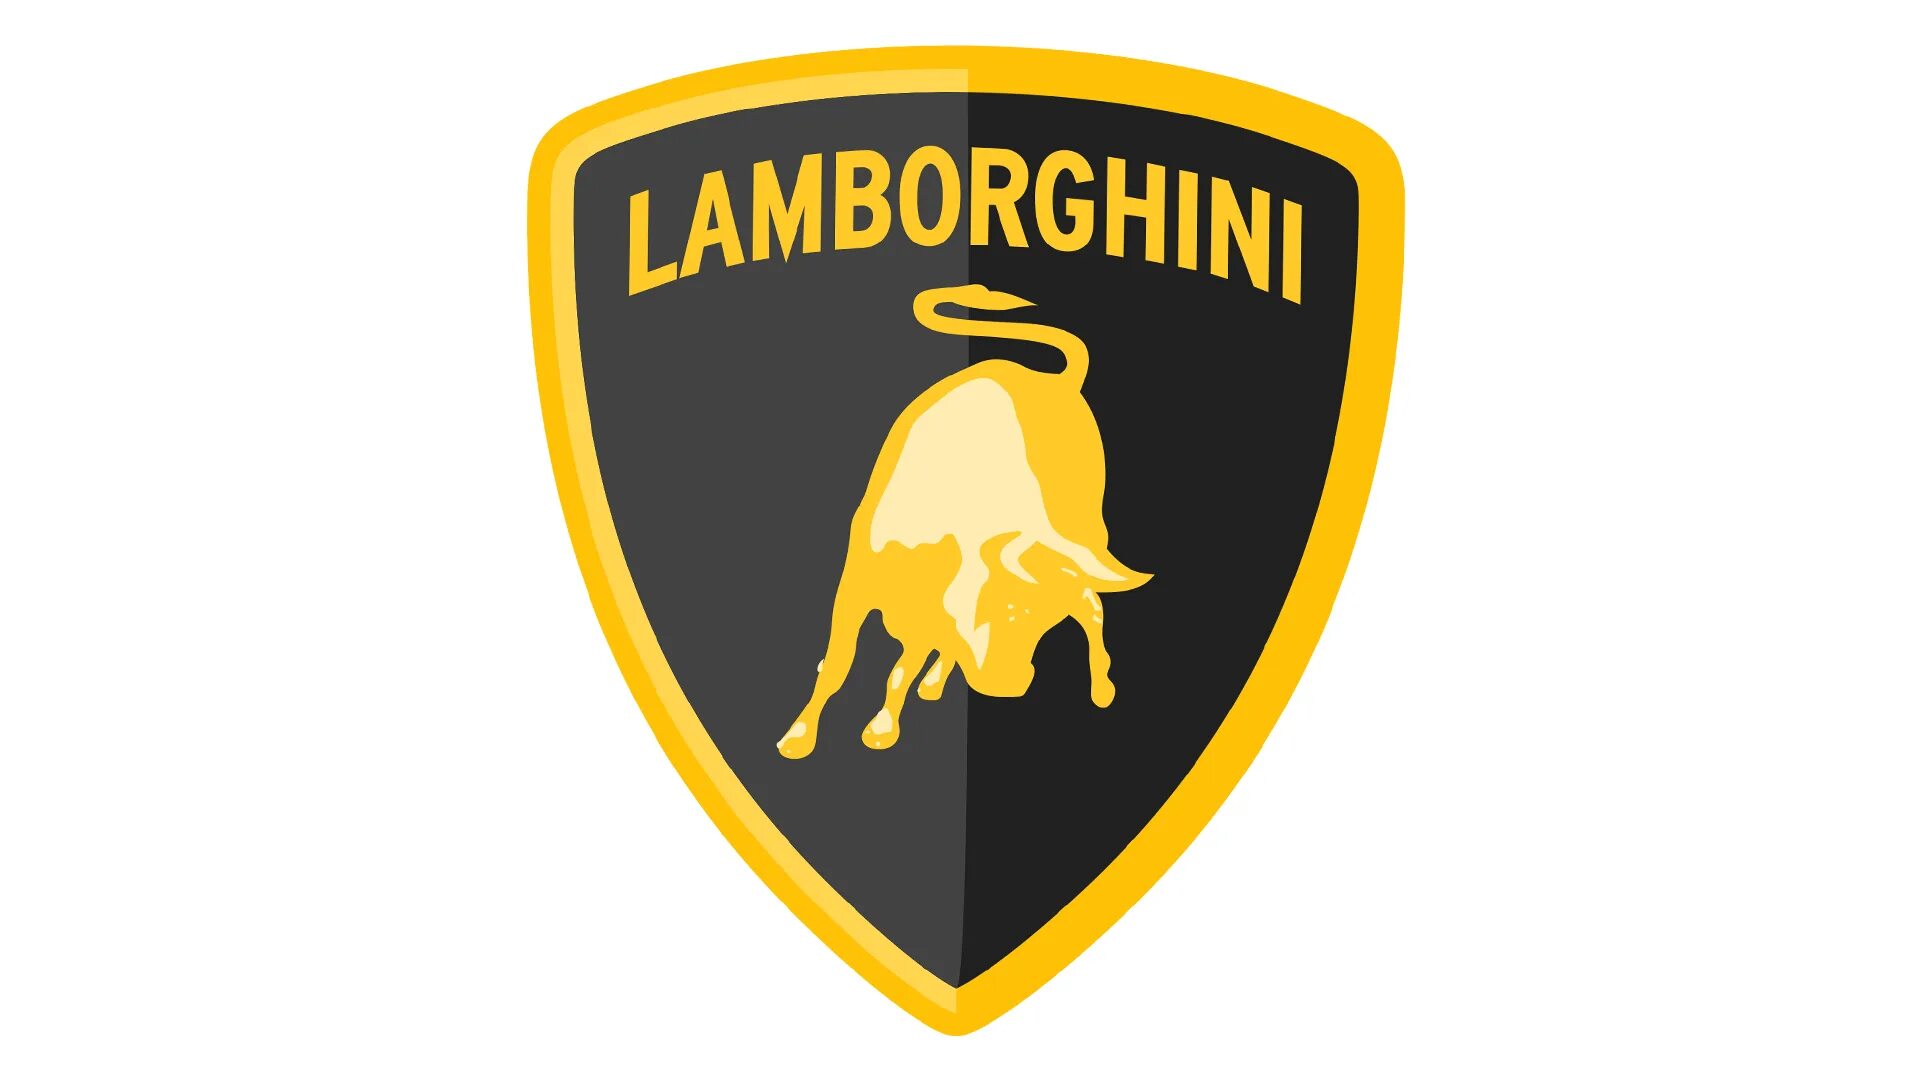 Значки автомобилей Ламборгини. Логотип Ламборджини. Значок машины Ламборджини. Значок Ламборджини фото. Новый значок ламборгини